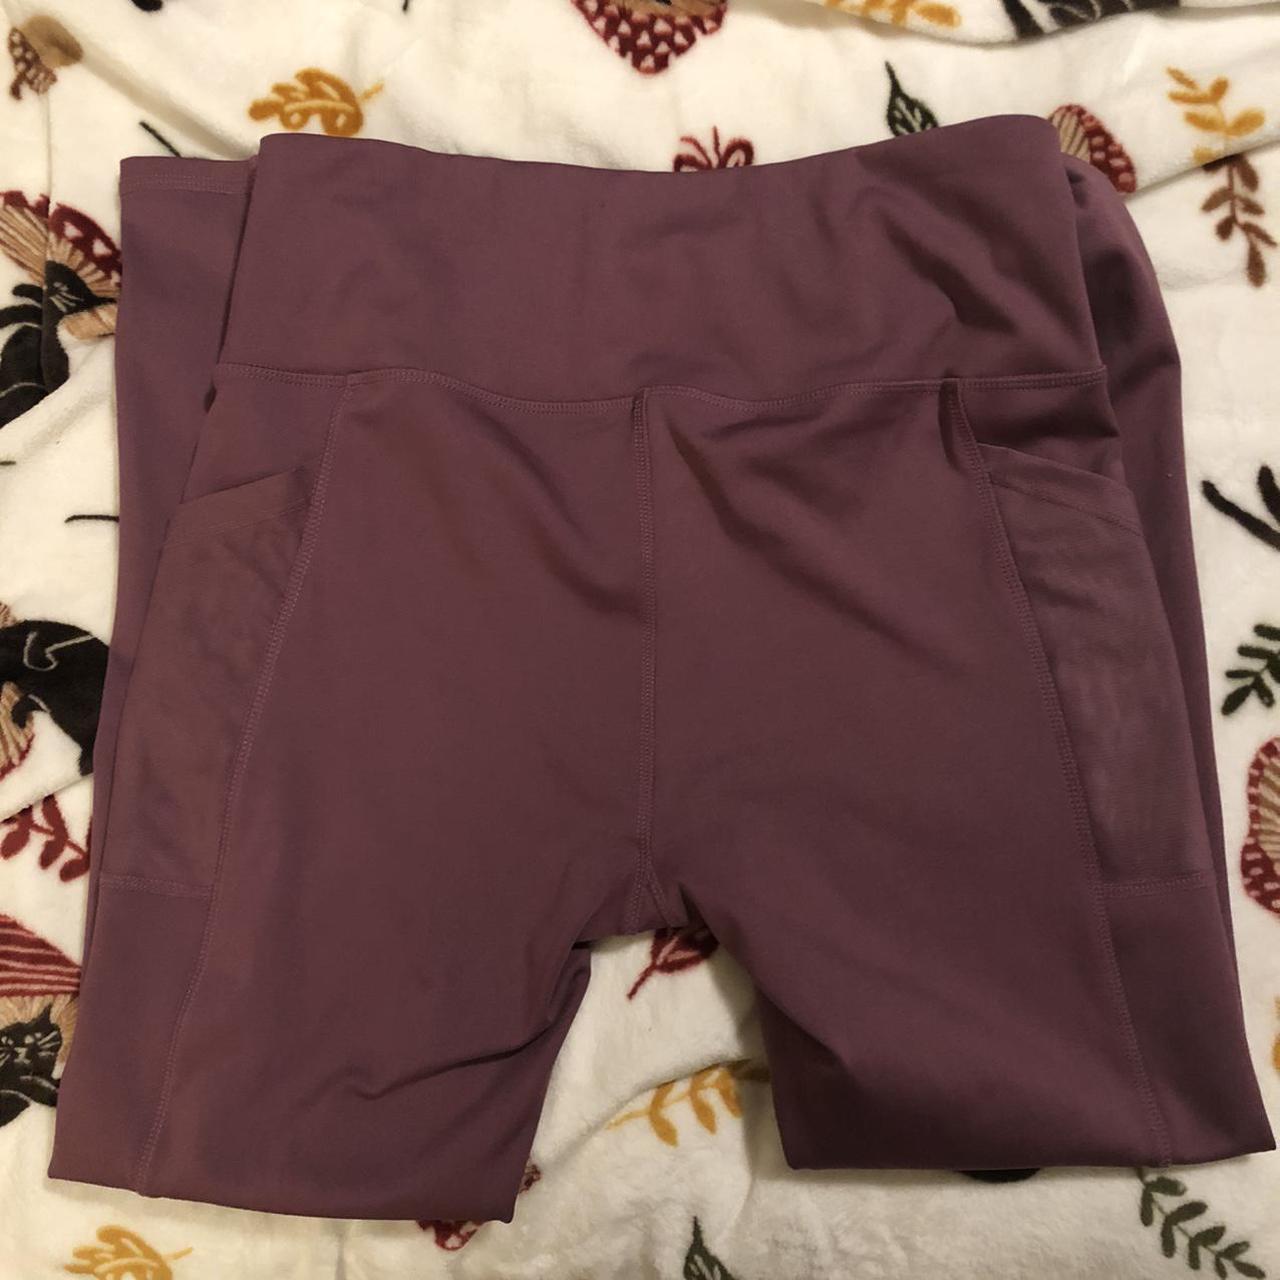 Product Image 1 - medium purple athletic leggings with